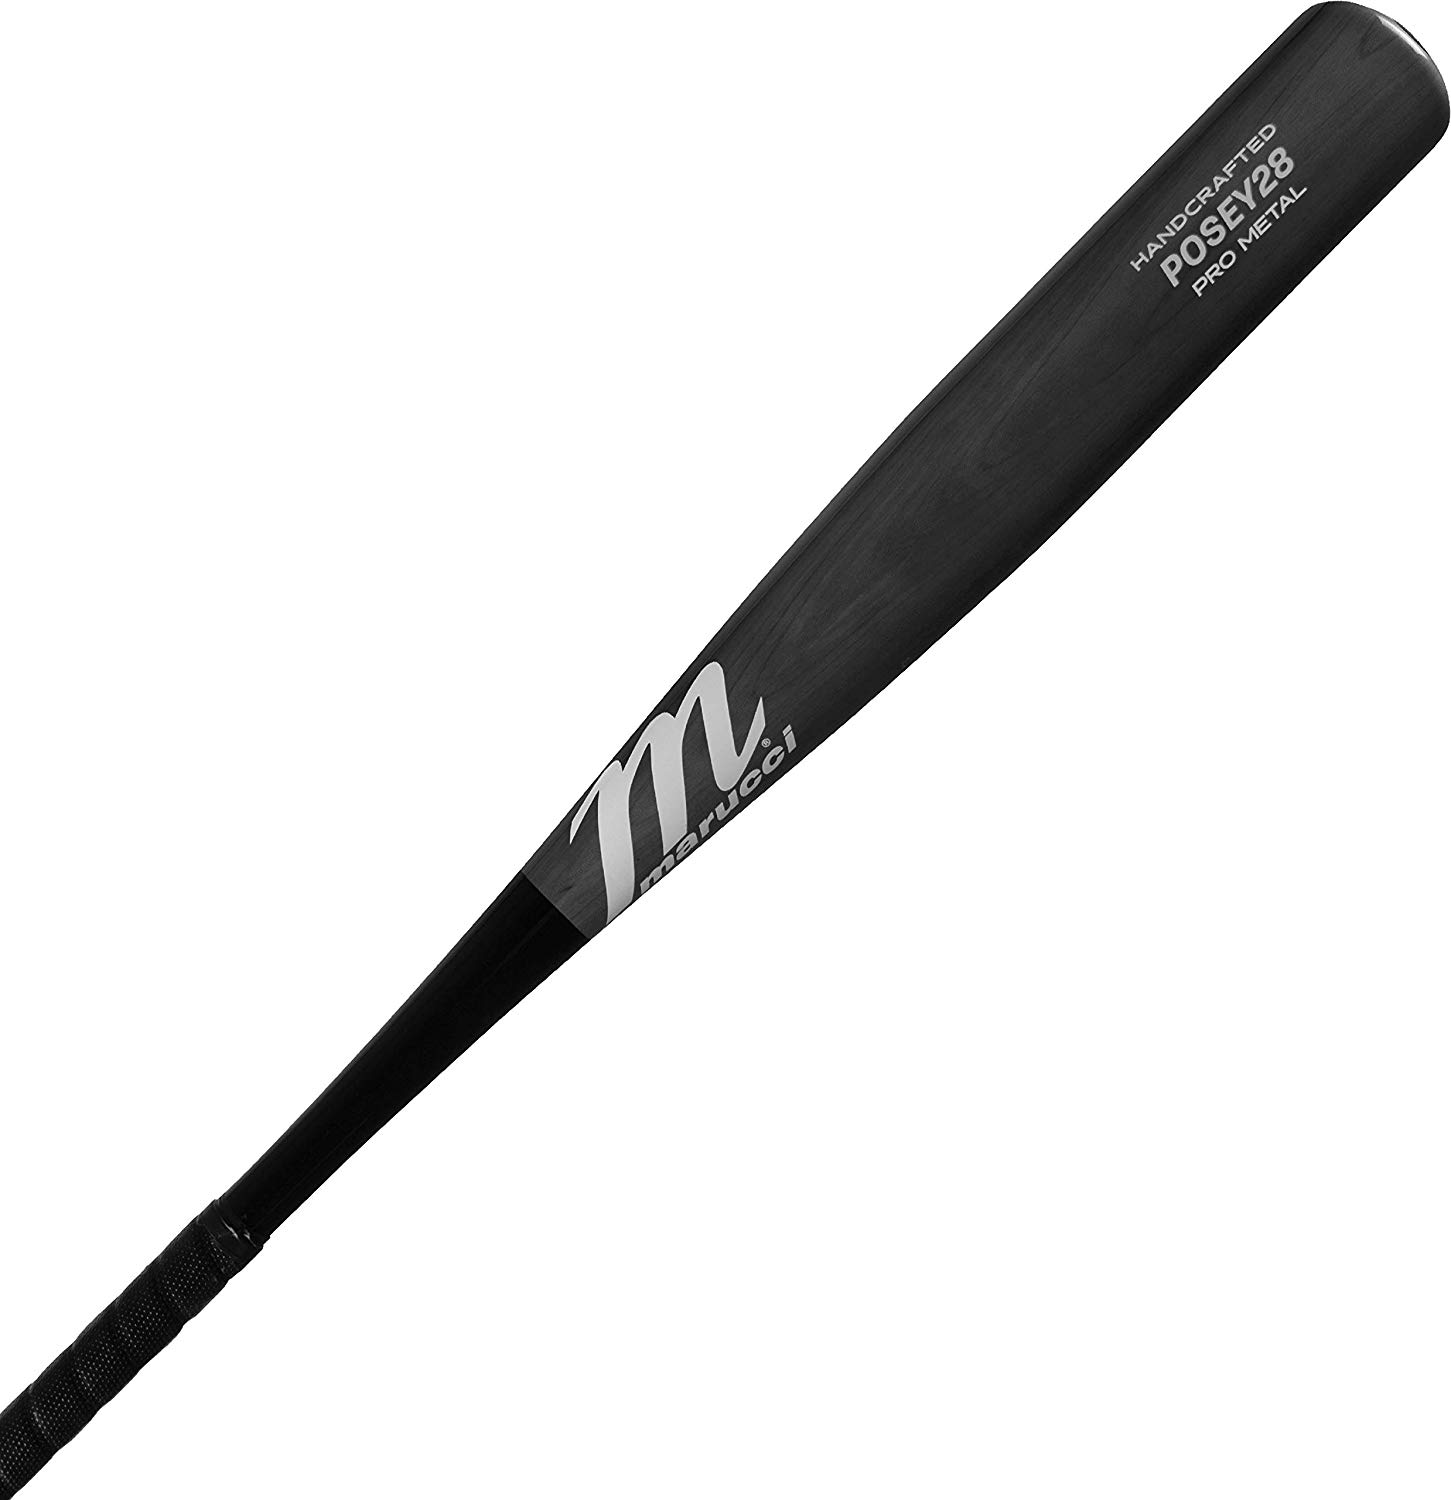 marucci-posey28-pro-metal-bbcor-baseball-bat-mcbp28s-33-inch-30-oz MCBP28S-3330 Marucci 849817095591 AZ105 alloy the strongest aluminum on the Marucci bat line allows